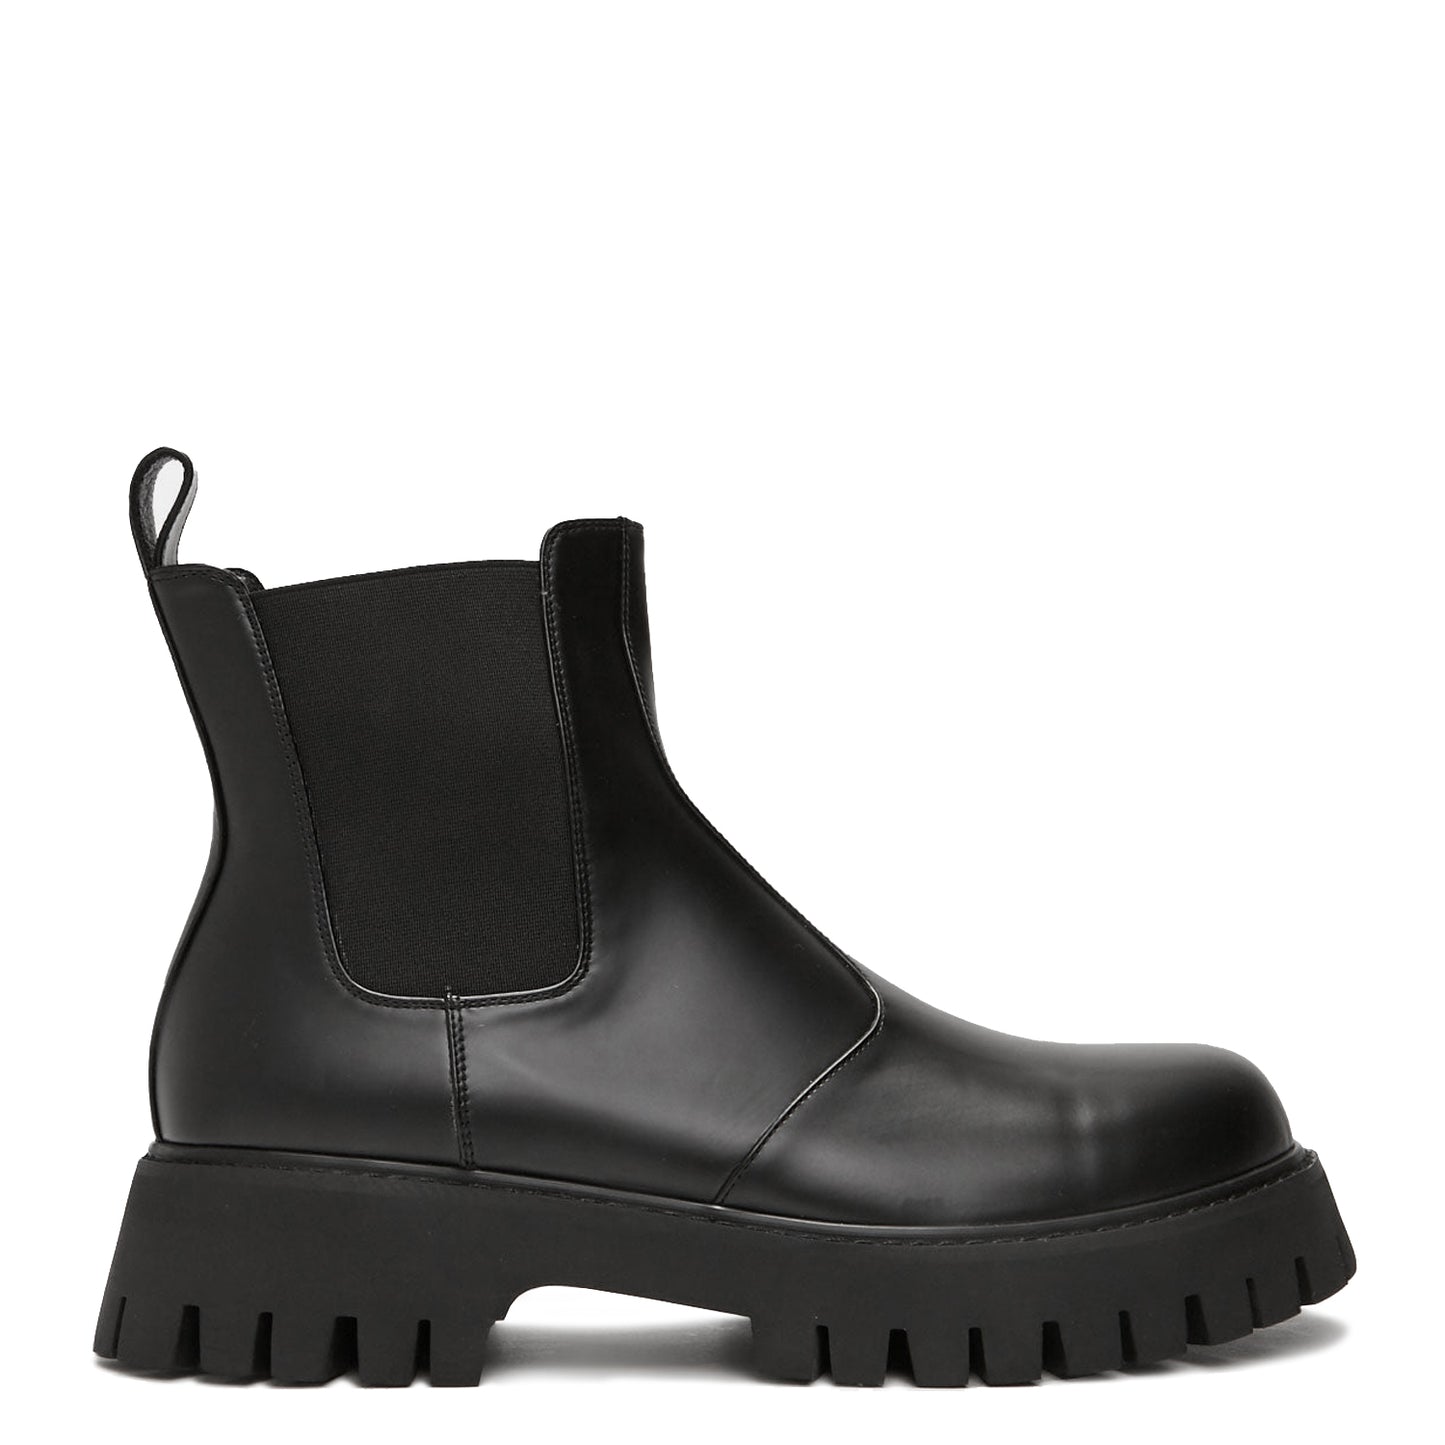 New Horizon Men's Chelsea Boots - Ankle Boots - KOI Footwear - Black - Main View